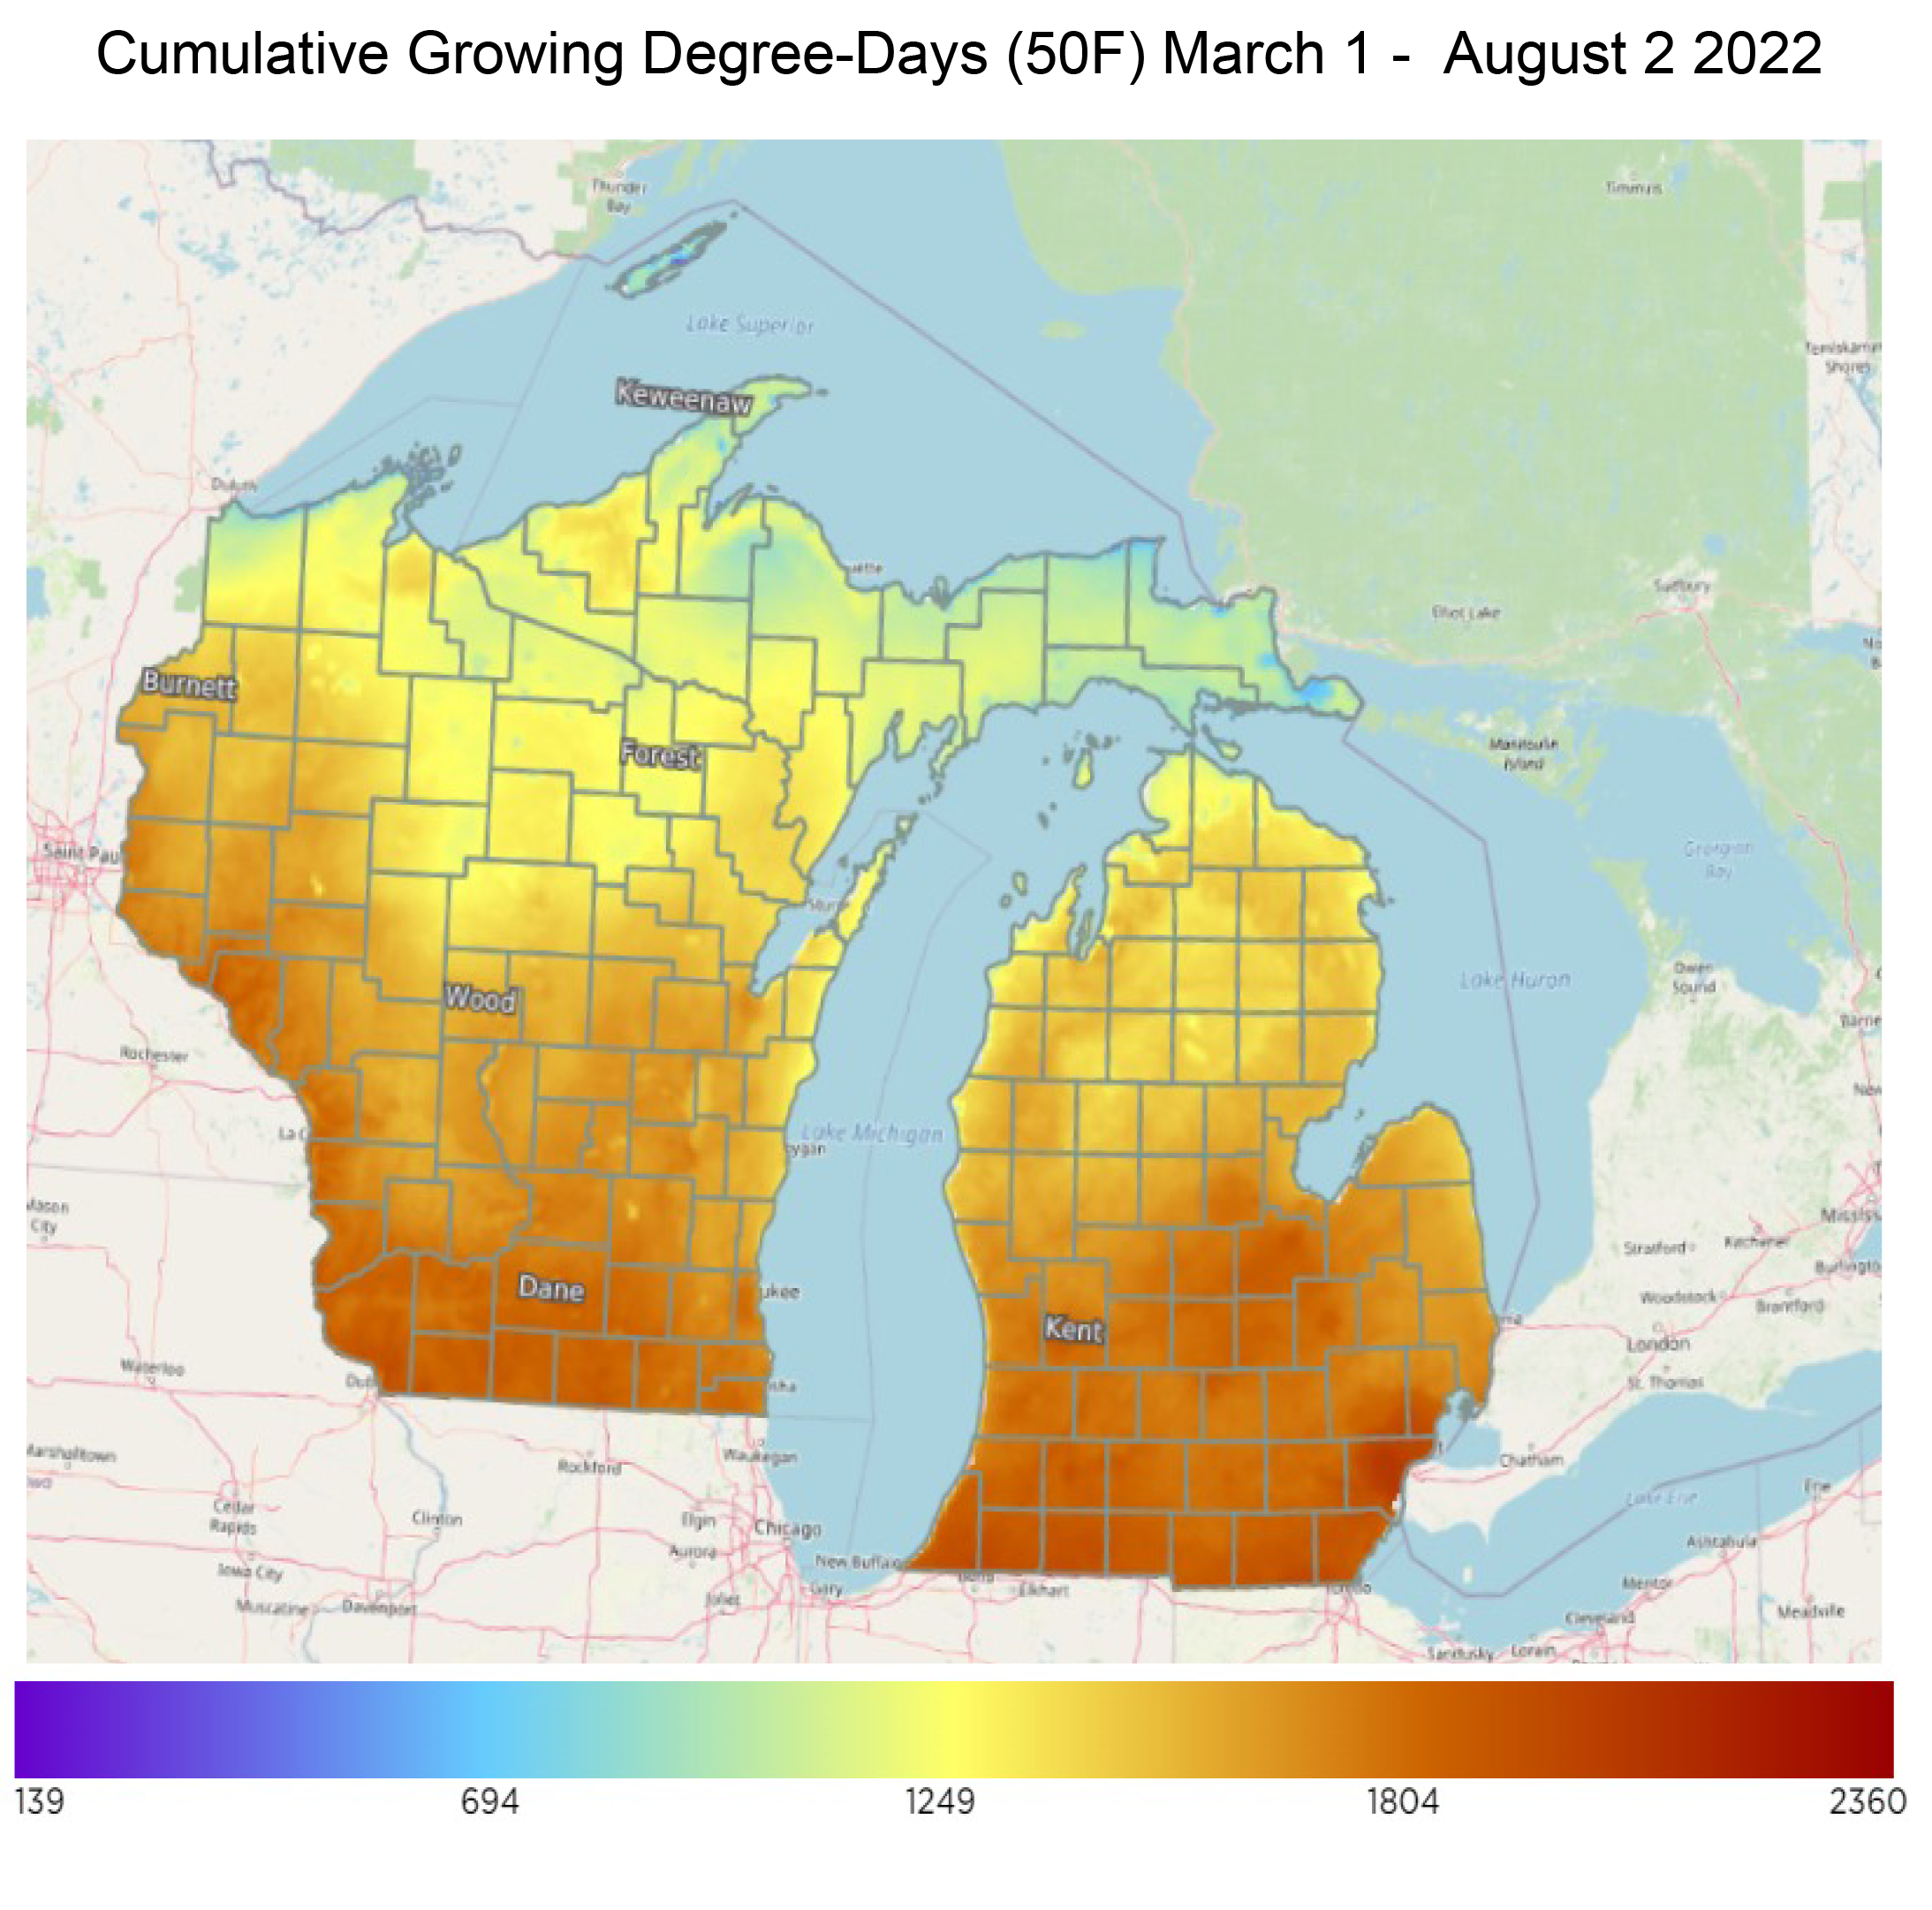 GDD map of Michigan.